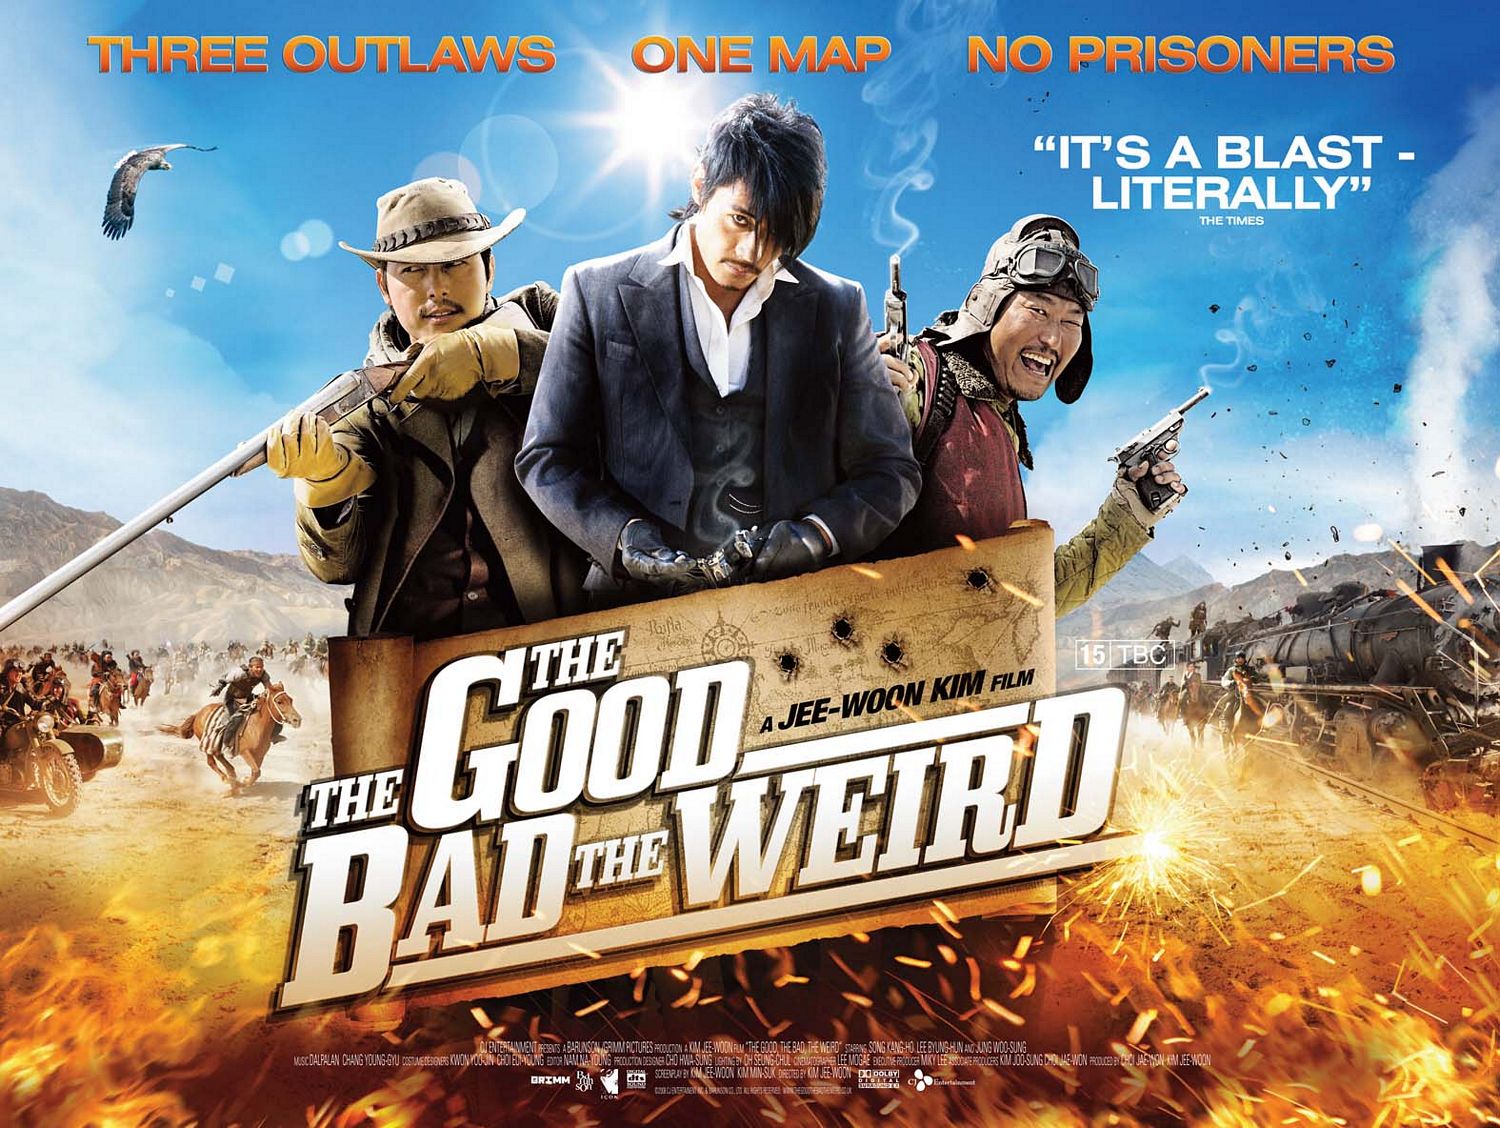 The Good, the Bad, the Weird movie